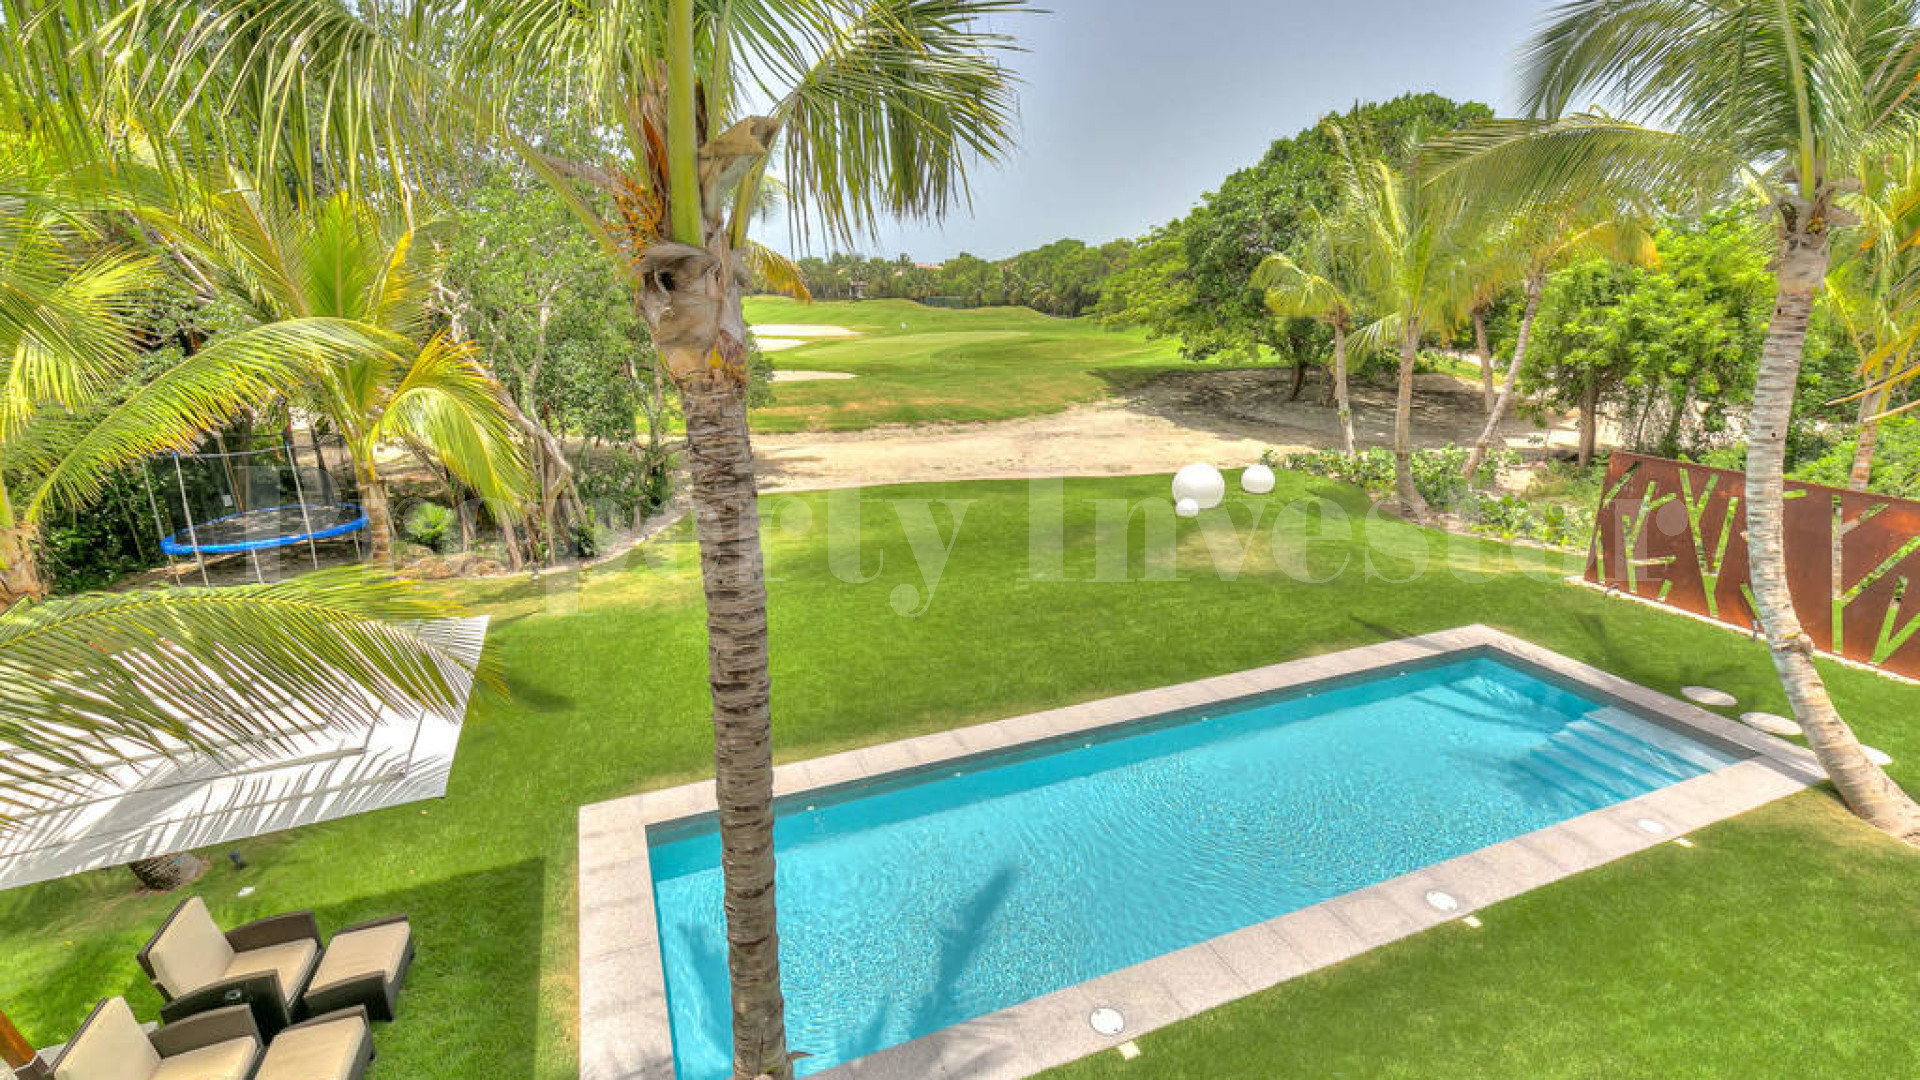 Fabulous 4 Bedroom Luxury Designer Golf Villa for Sale in Punta Cana, Dominican Republic